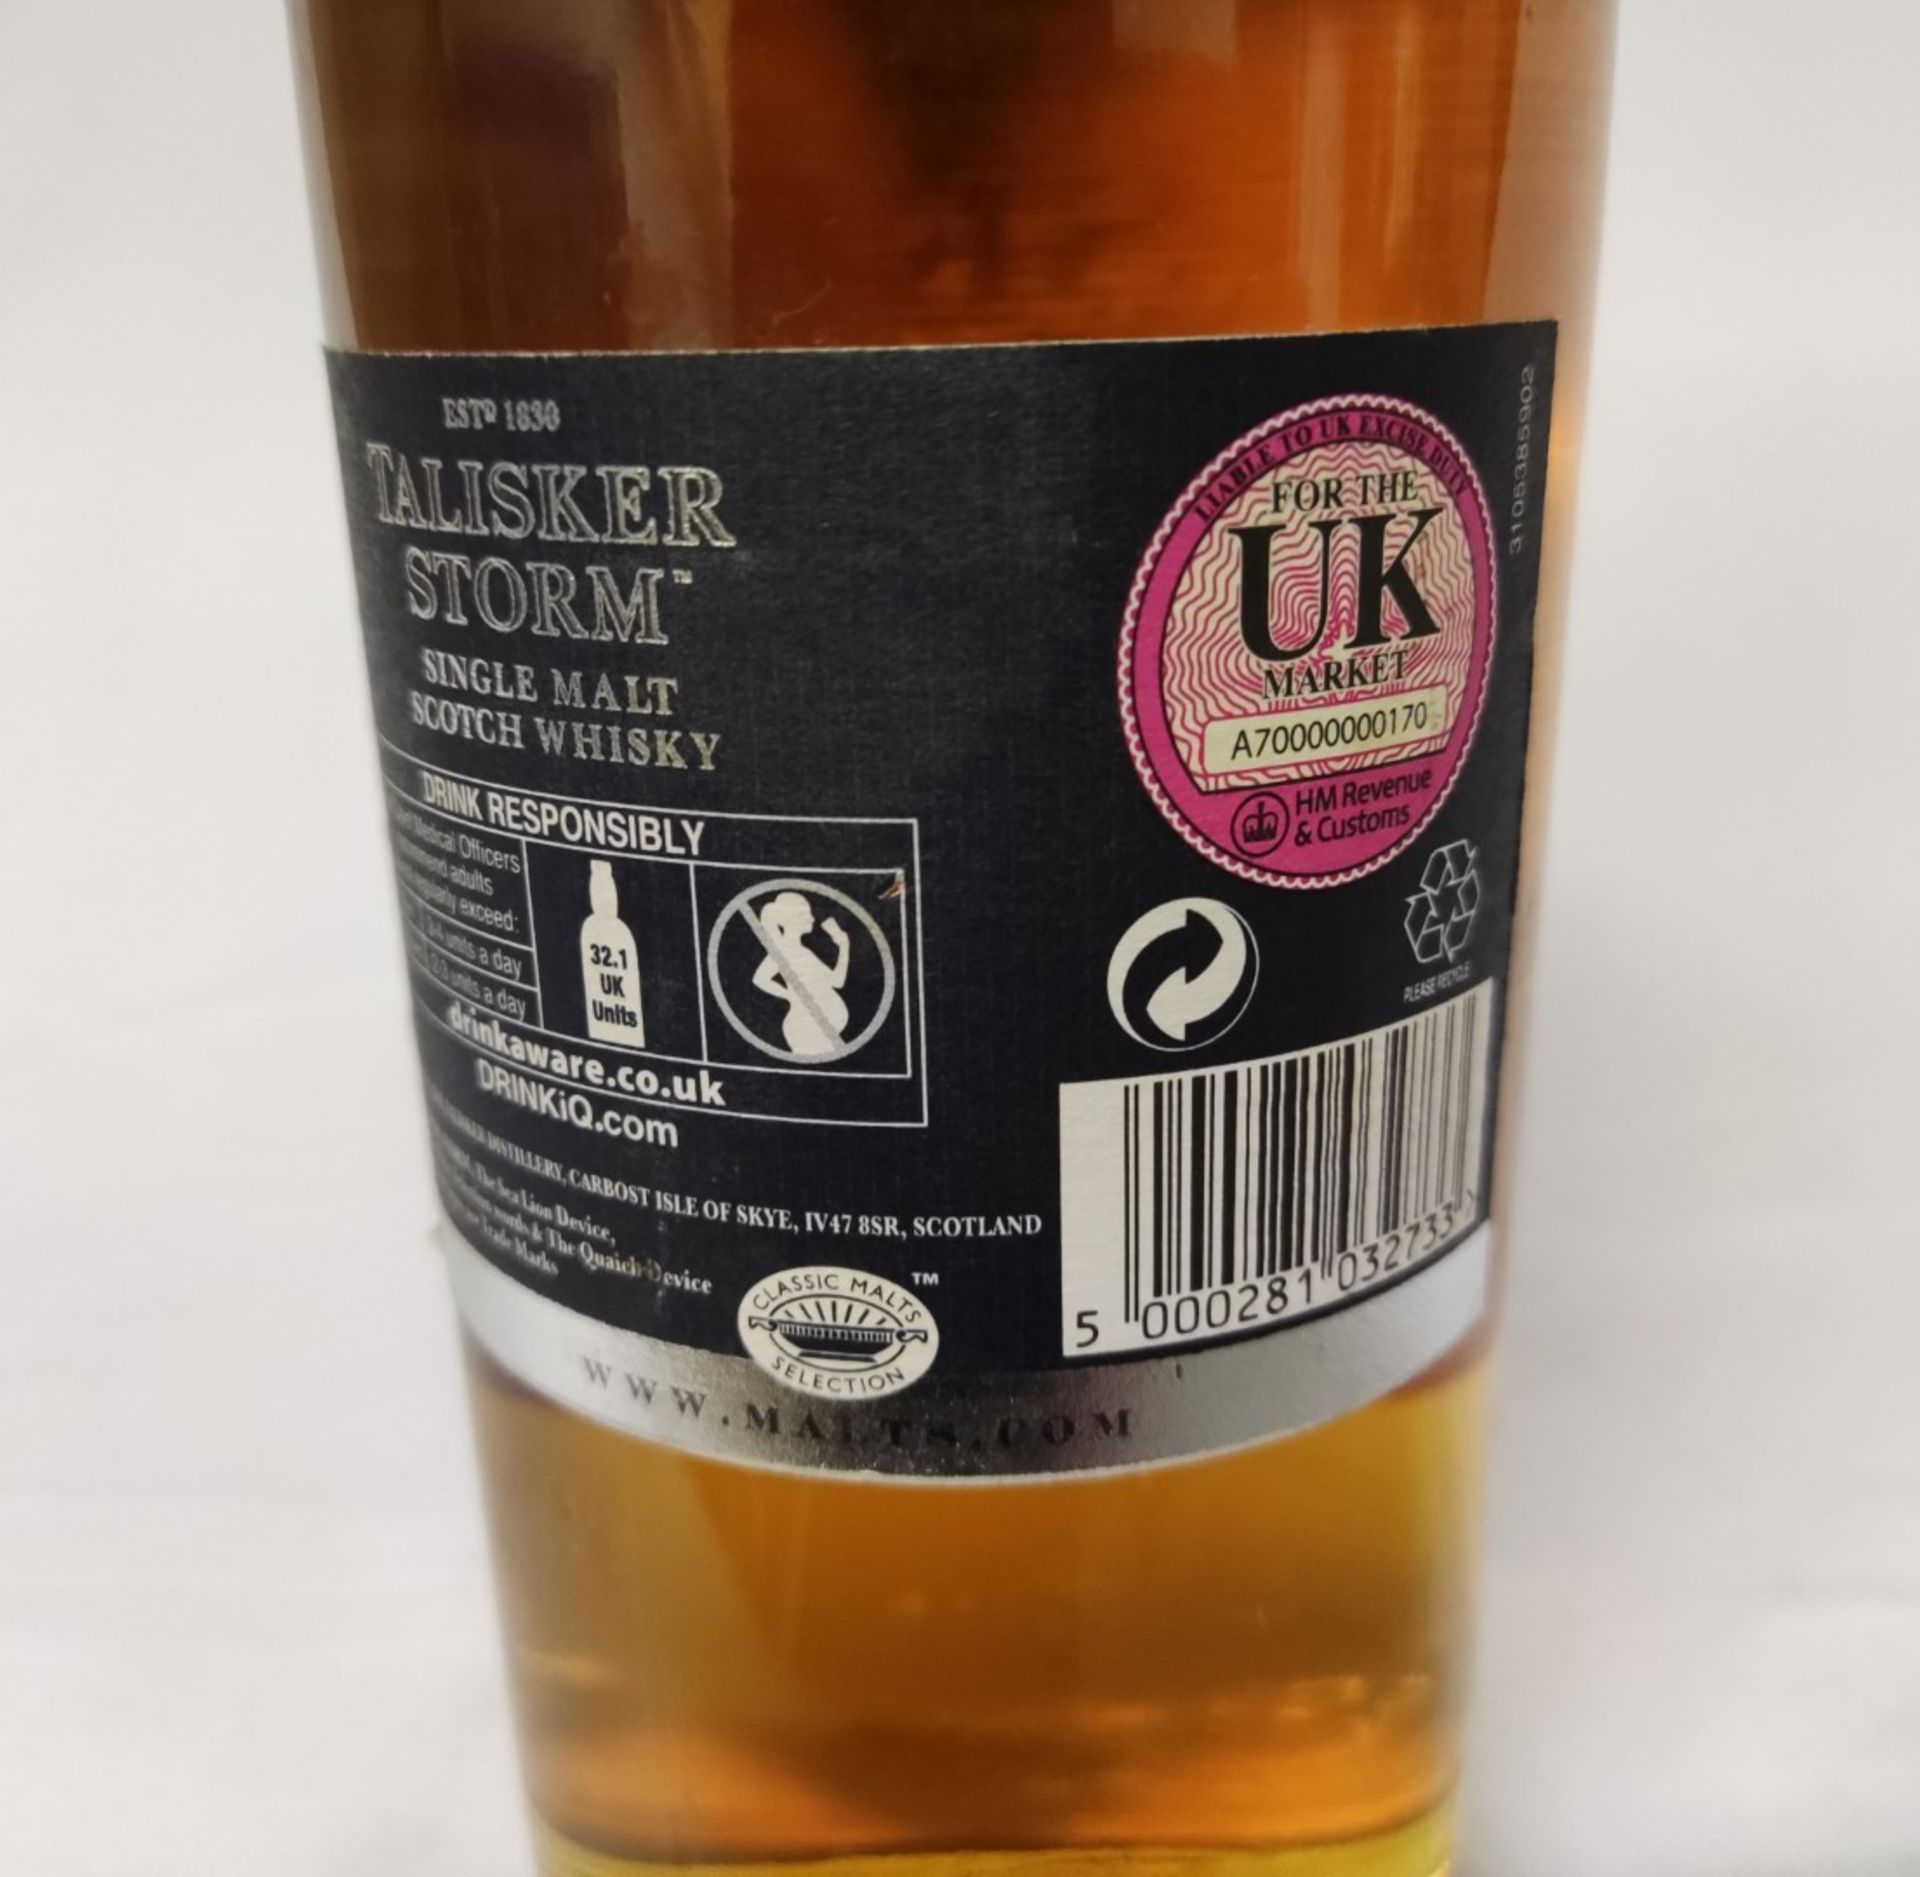 1 x Bottle of Talisker Storm Single Malt Scotch Whisky - 70cl - Retail Price £46 - Ref: WAS447/ - Image 6 of 7